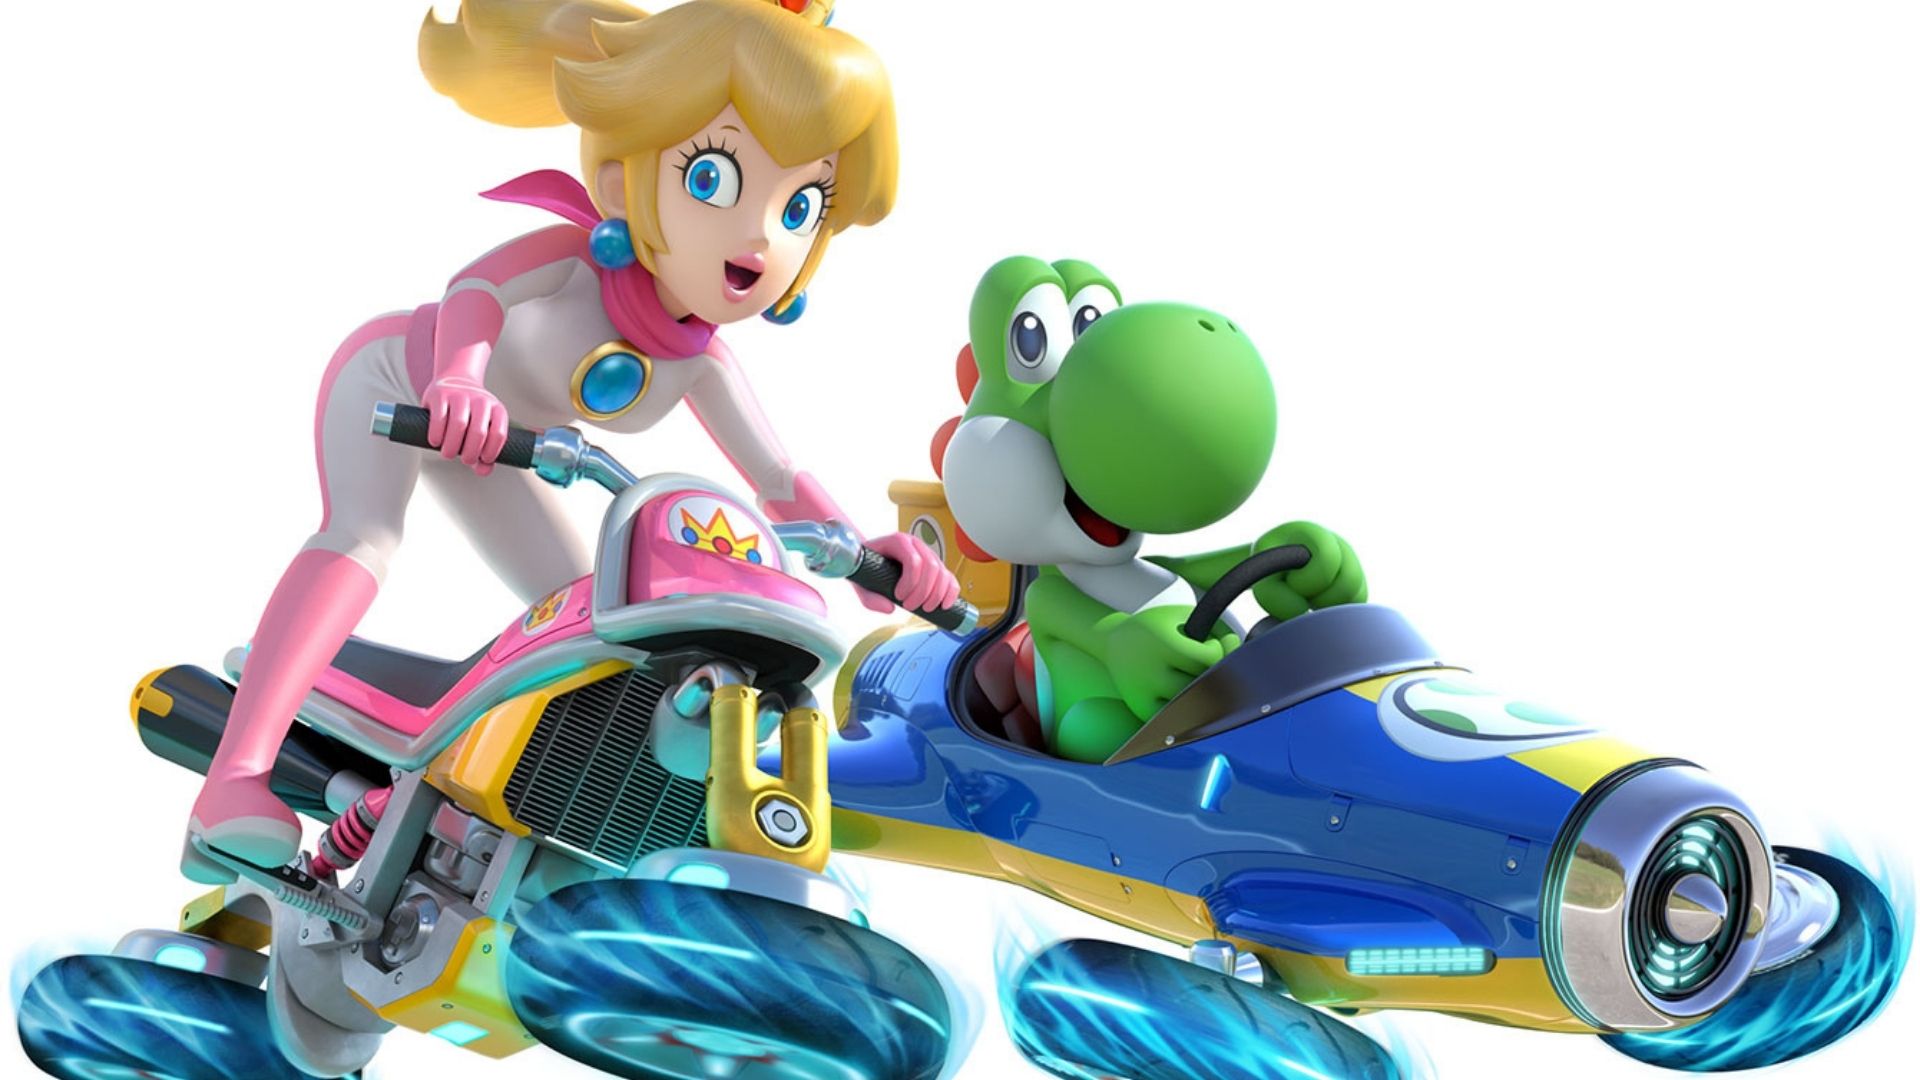 Yoshi and Peach riding futuristic karts from Mario Kart 8.